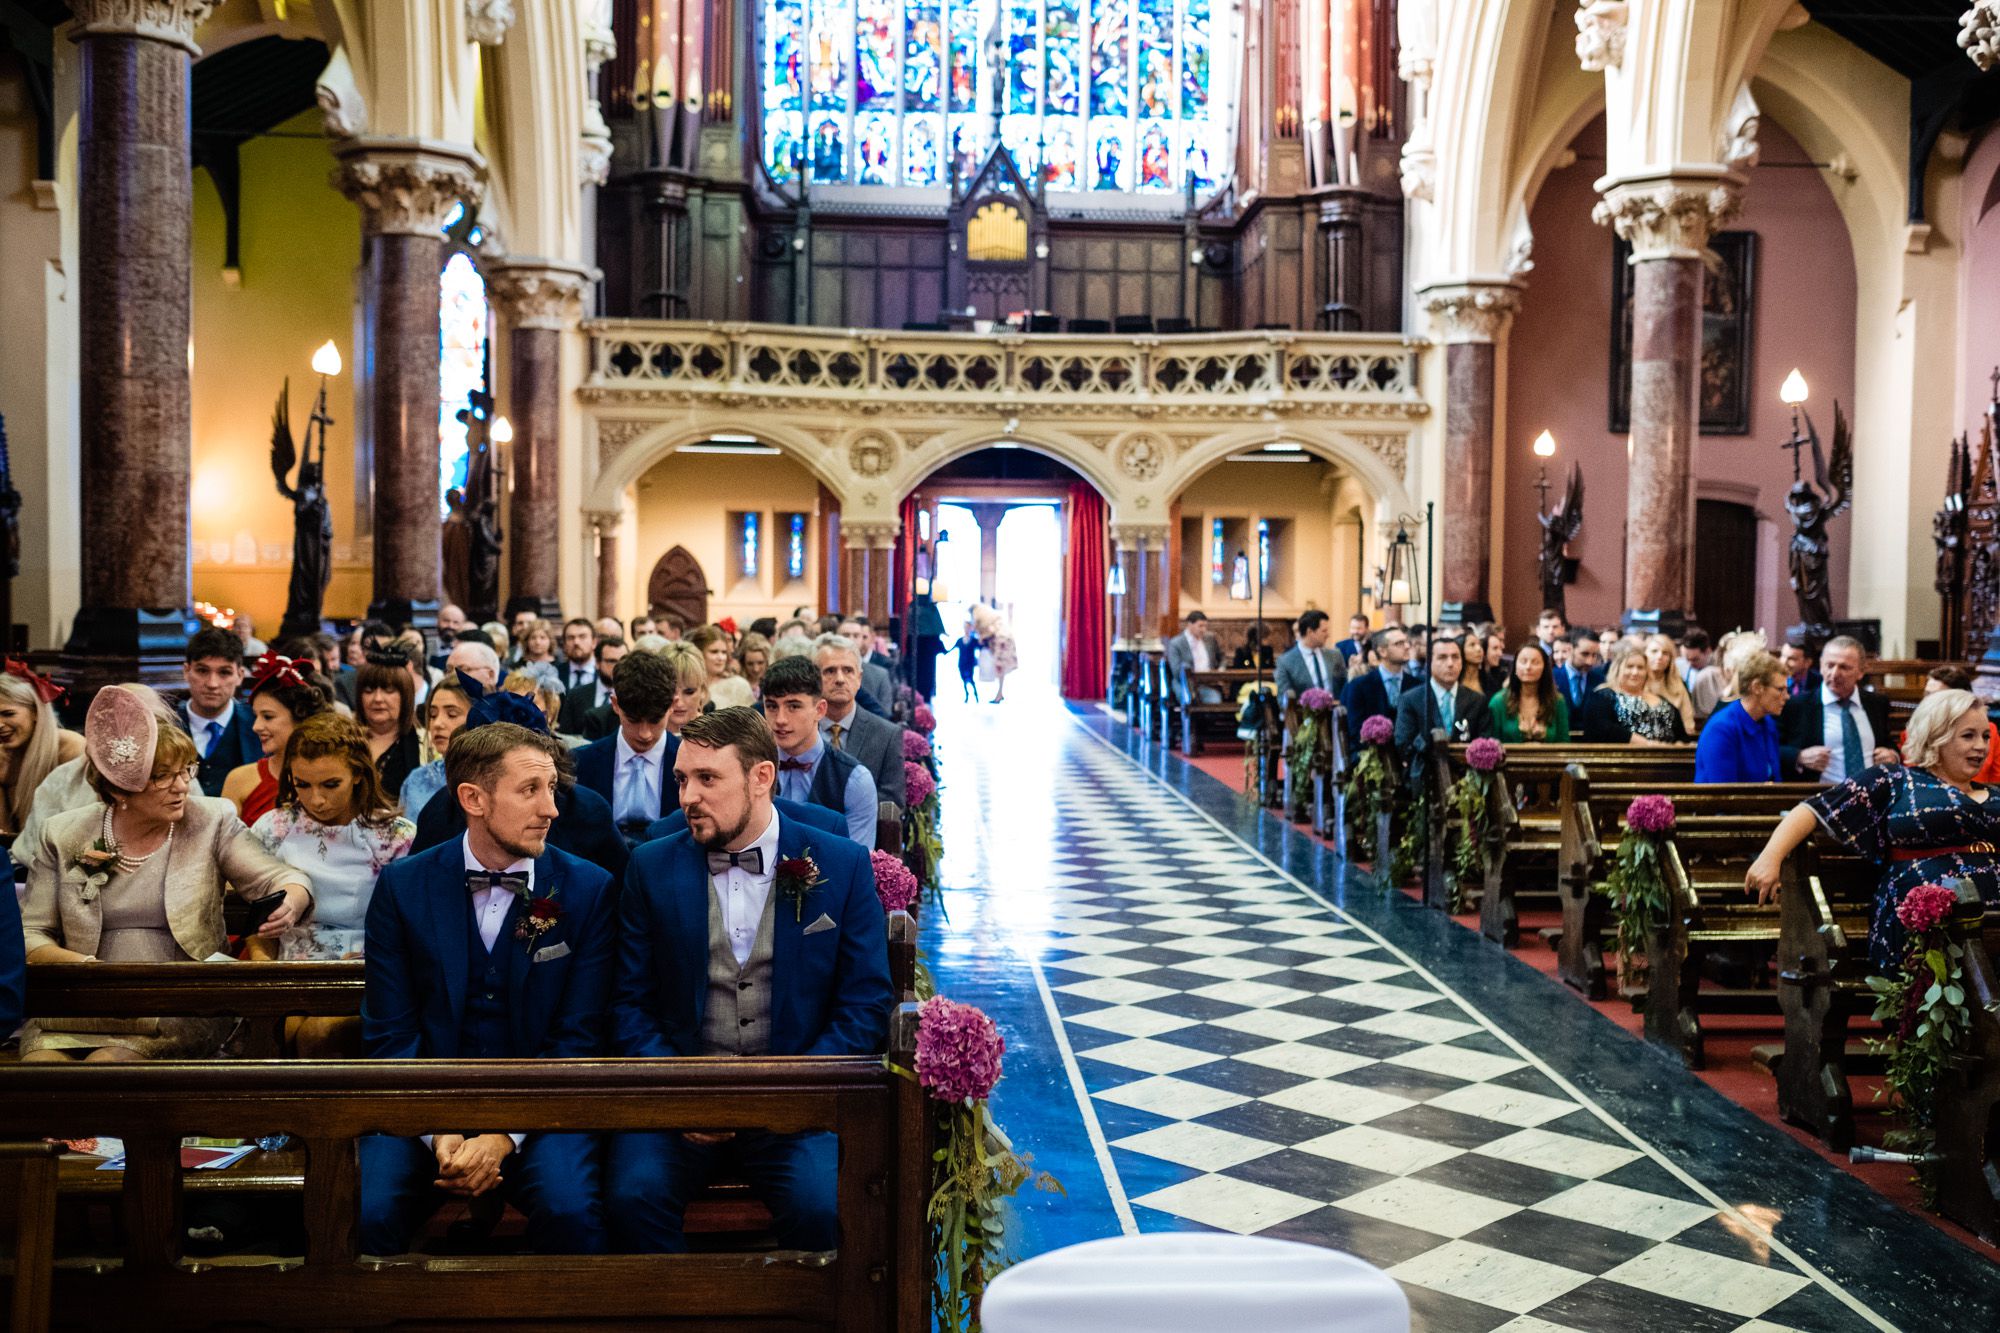 st-pauls-church-cork-wedding-ceremony